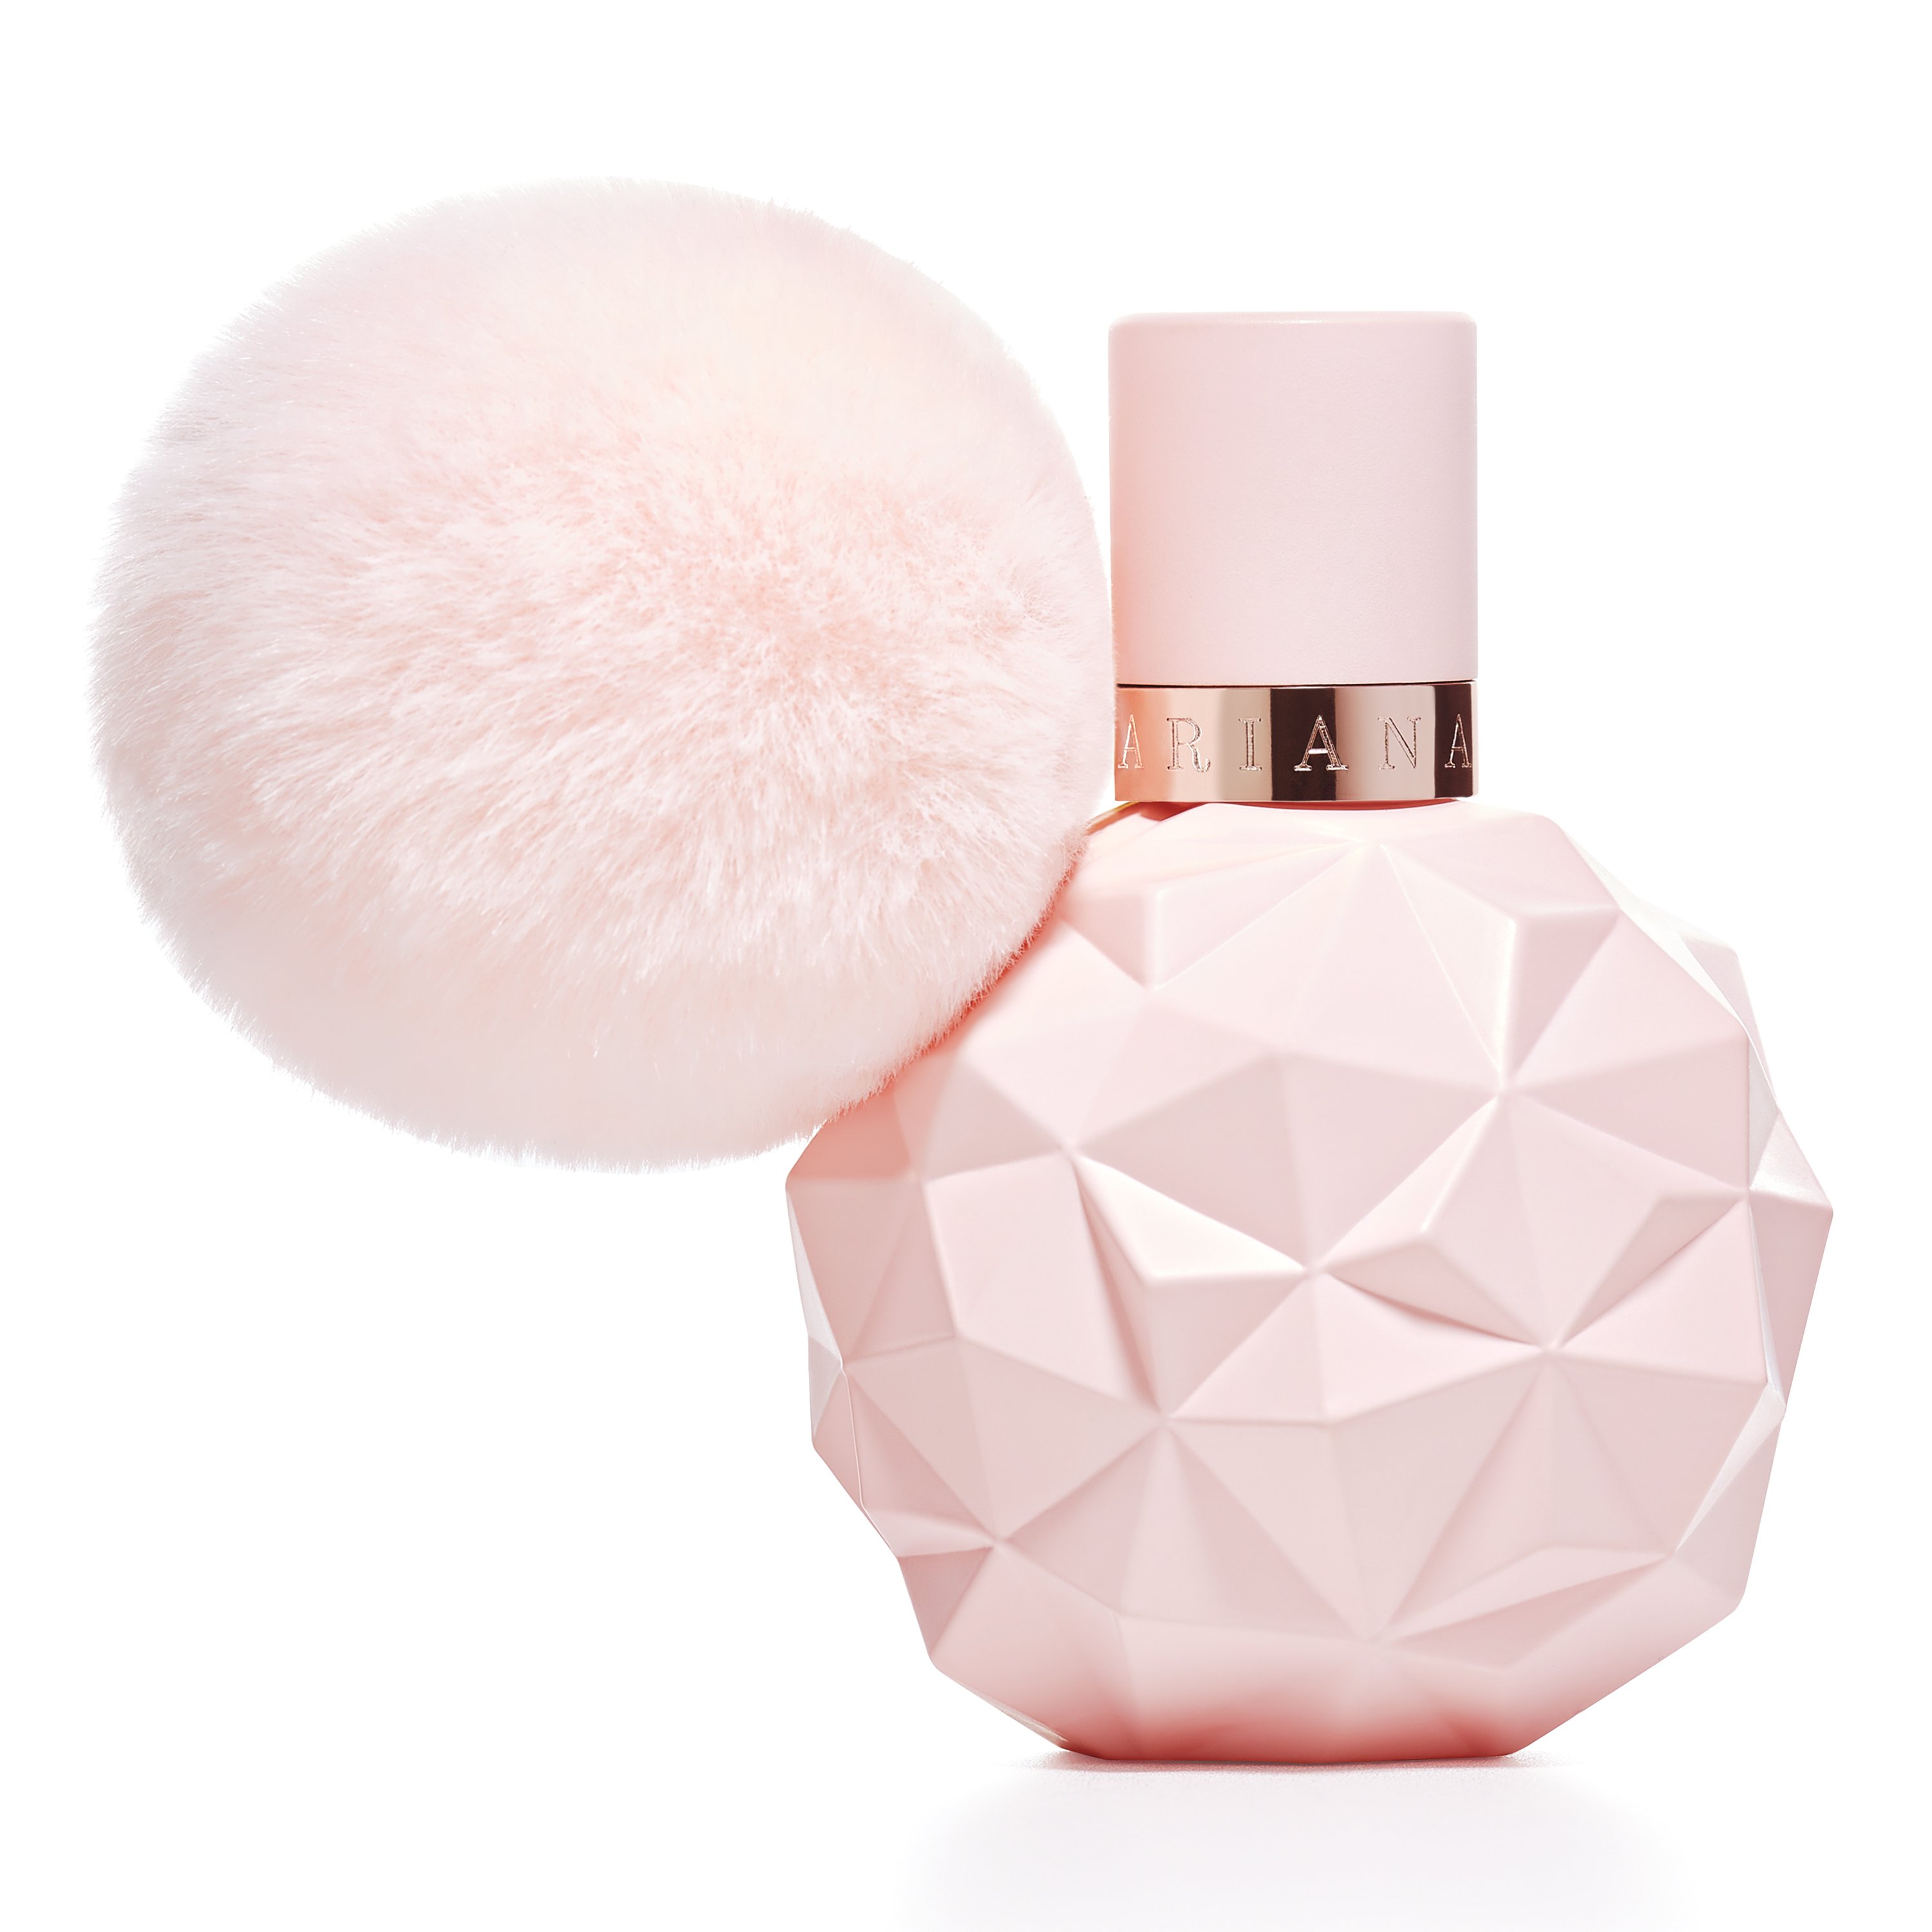 Ariana Grande Sweet Like Candy Eau de Parfum, Perfume for Women, 1 Oz - image 1 of 8